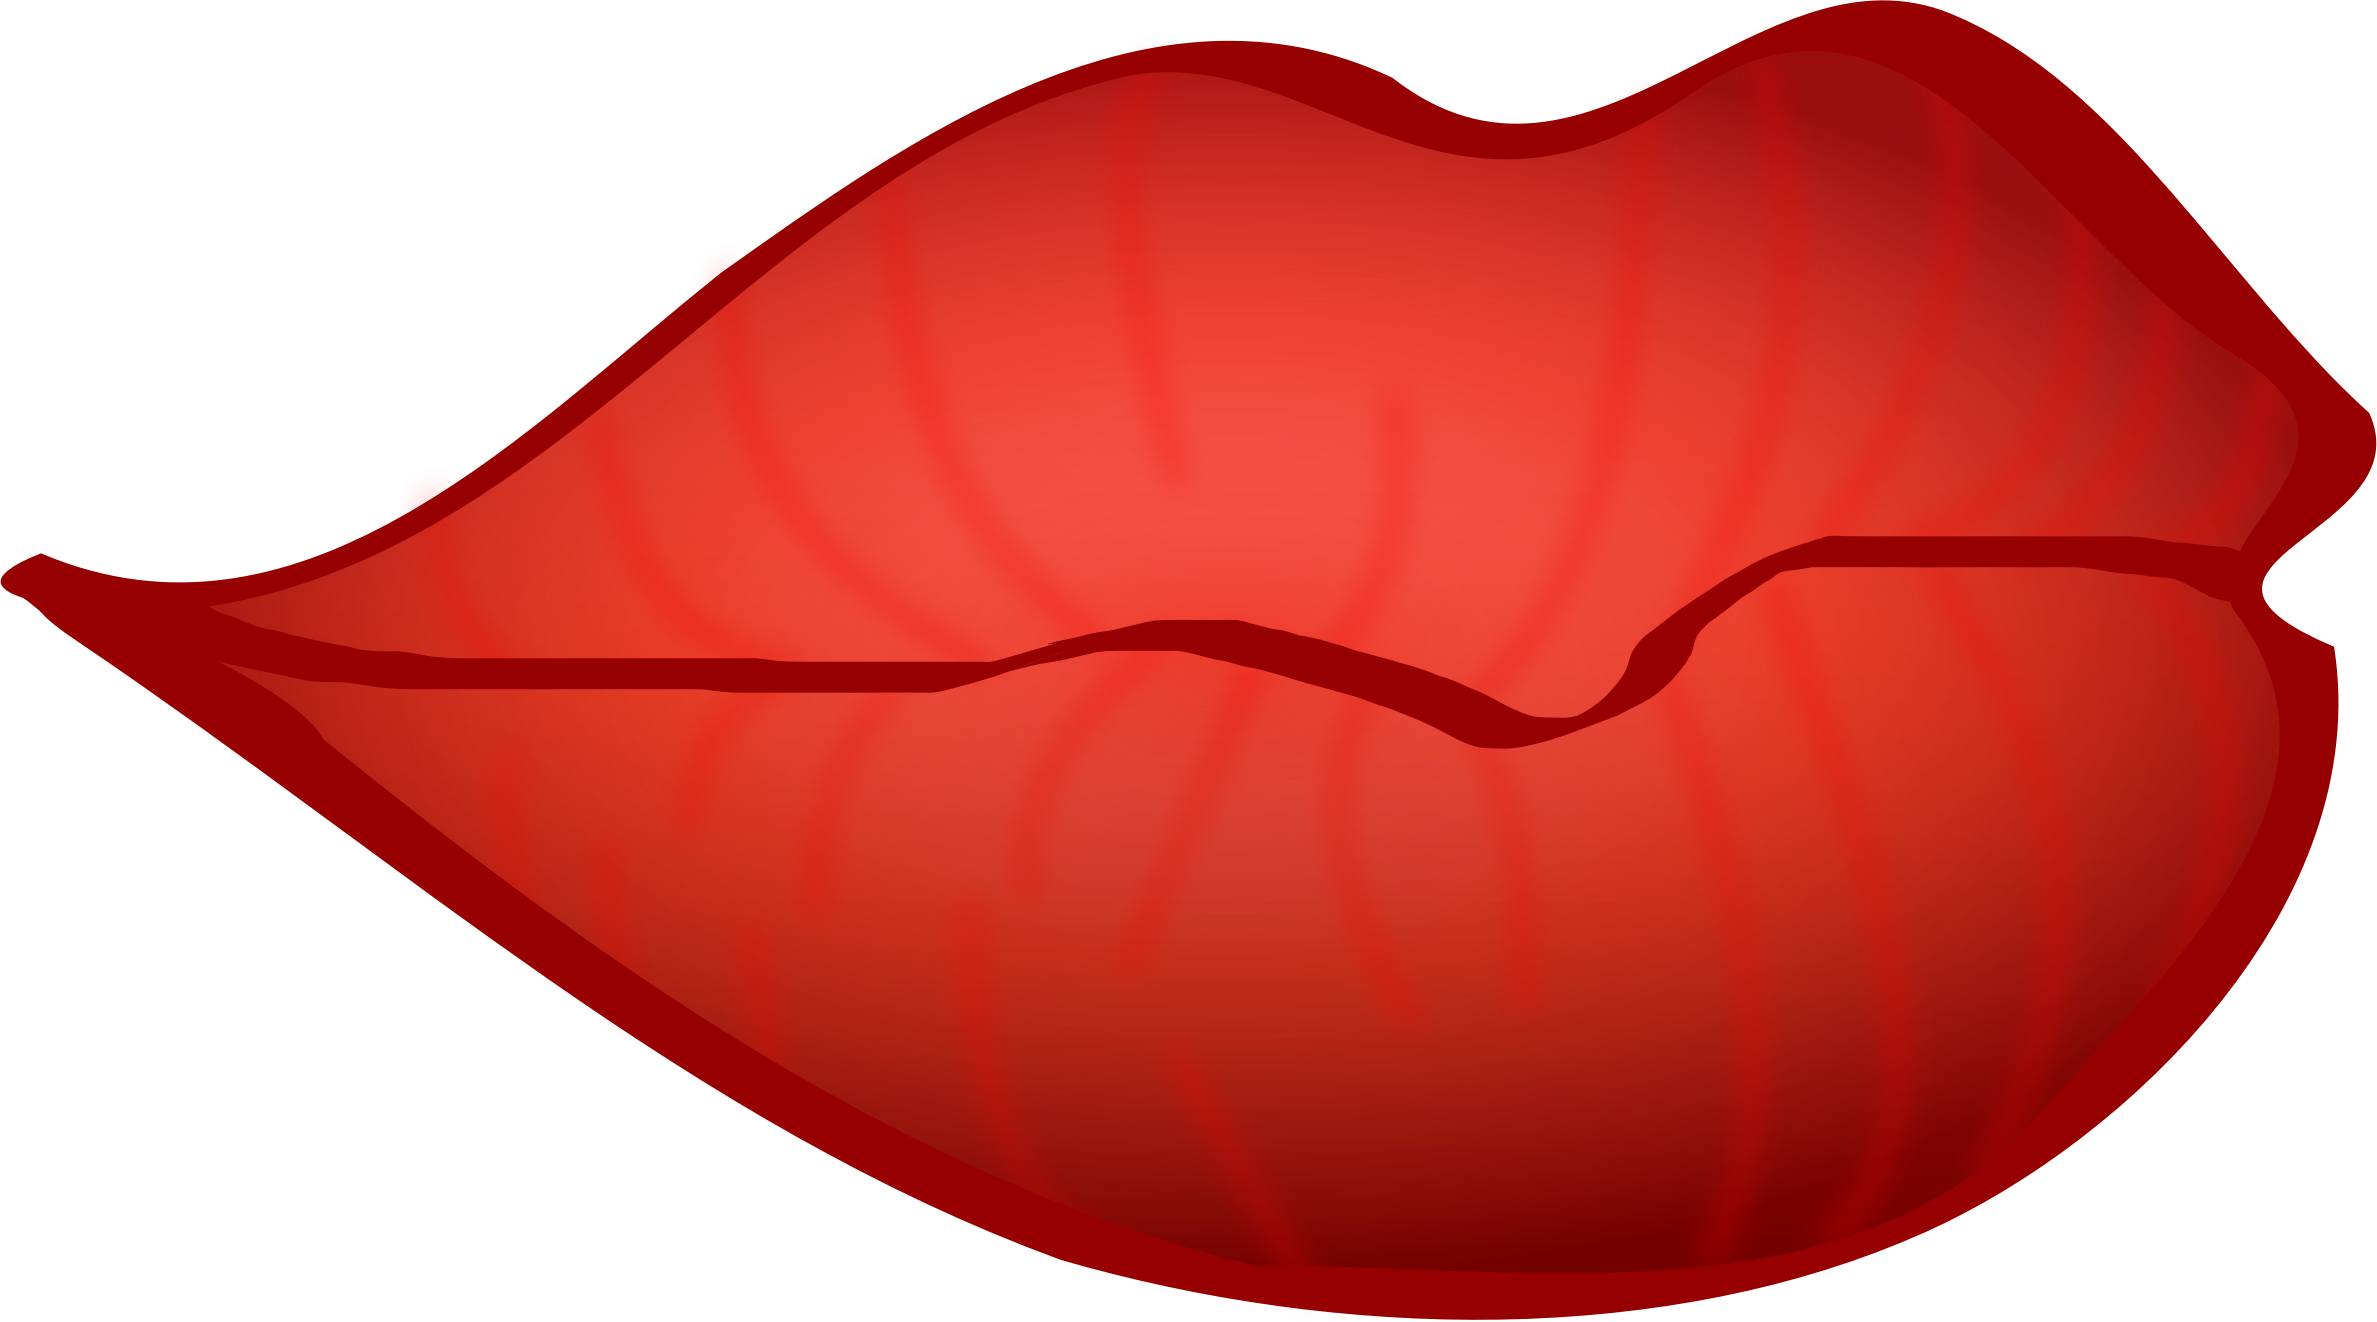 clip art of puckered lips - photo #50